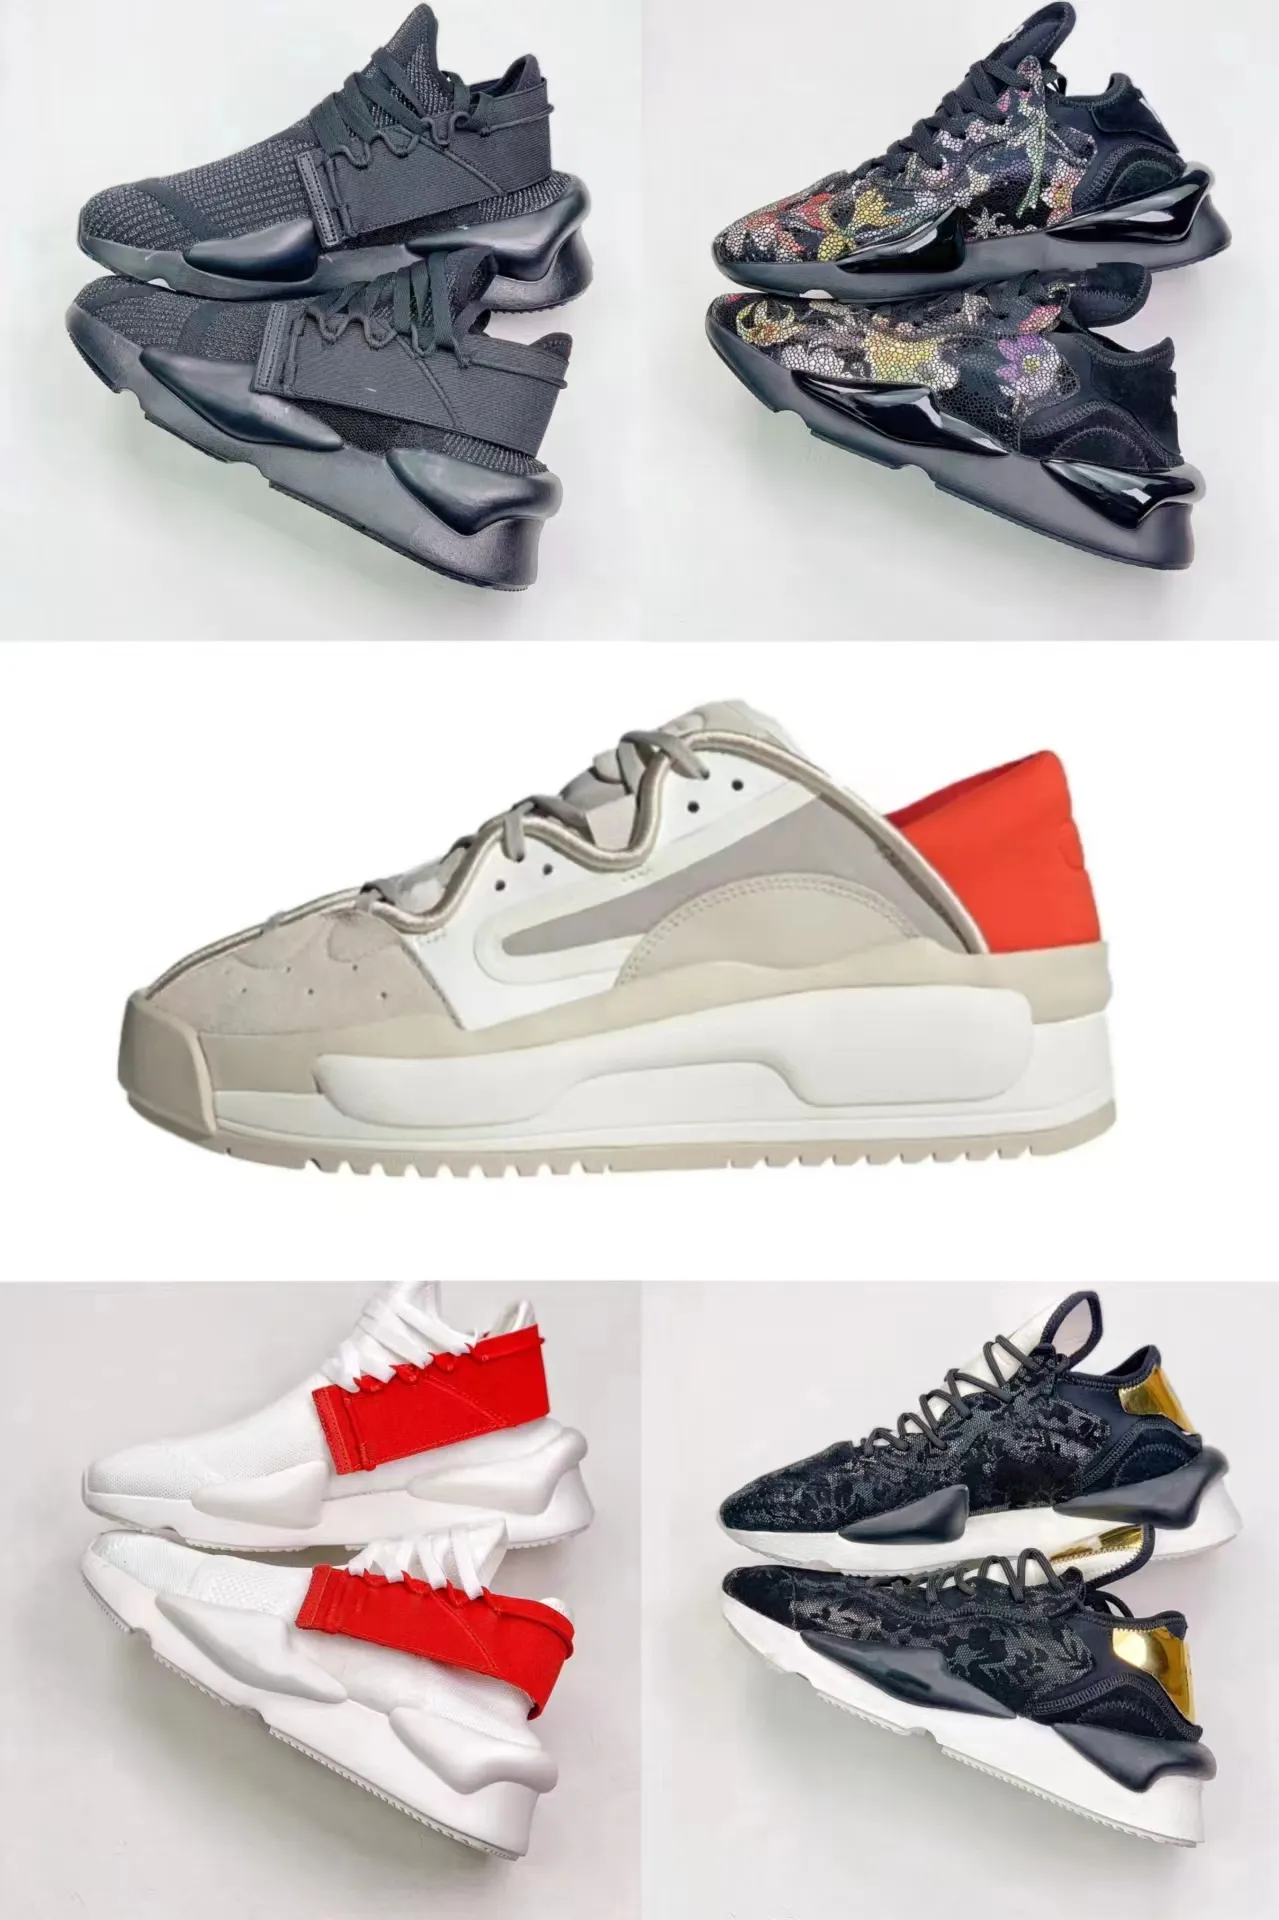 Design Y-3 Kaiwa Sneakers Herren Damen Schuhe Y3 Chunky Platform Sport Leder Casual Walking Trainer